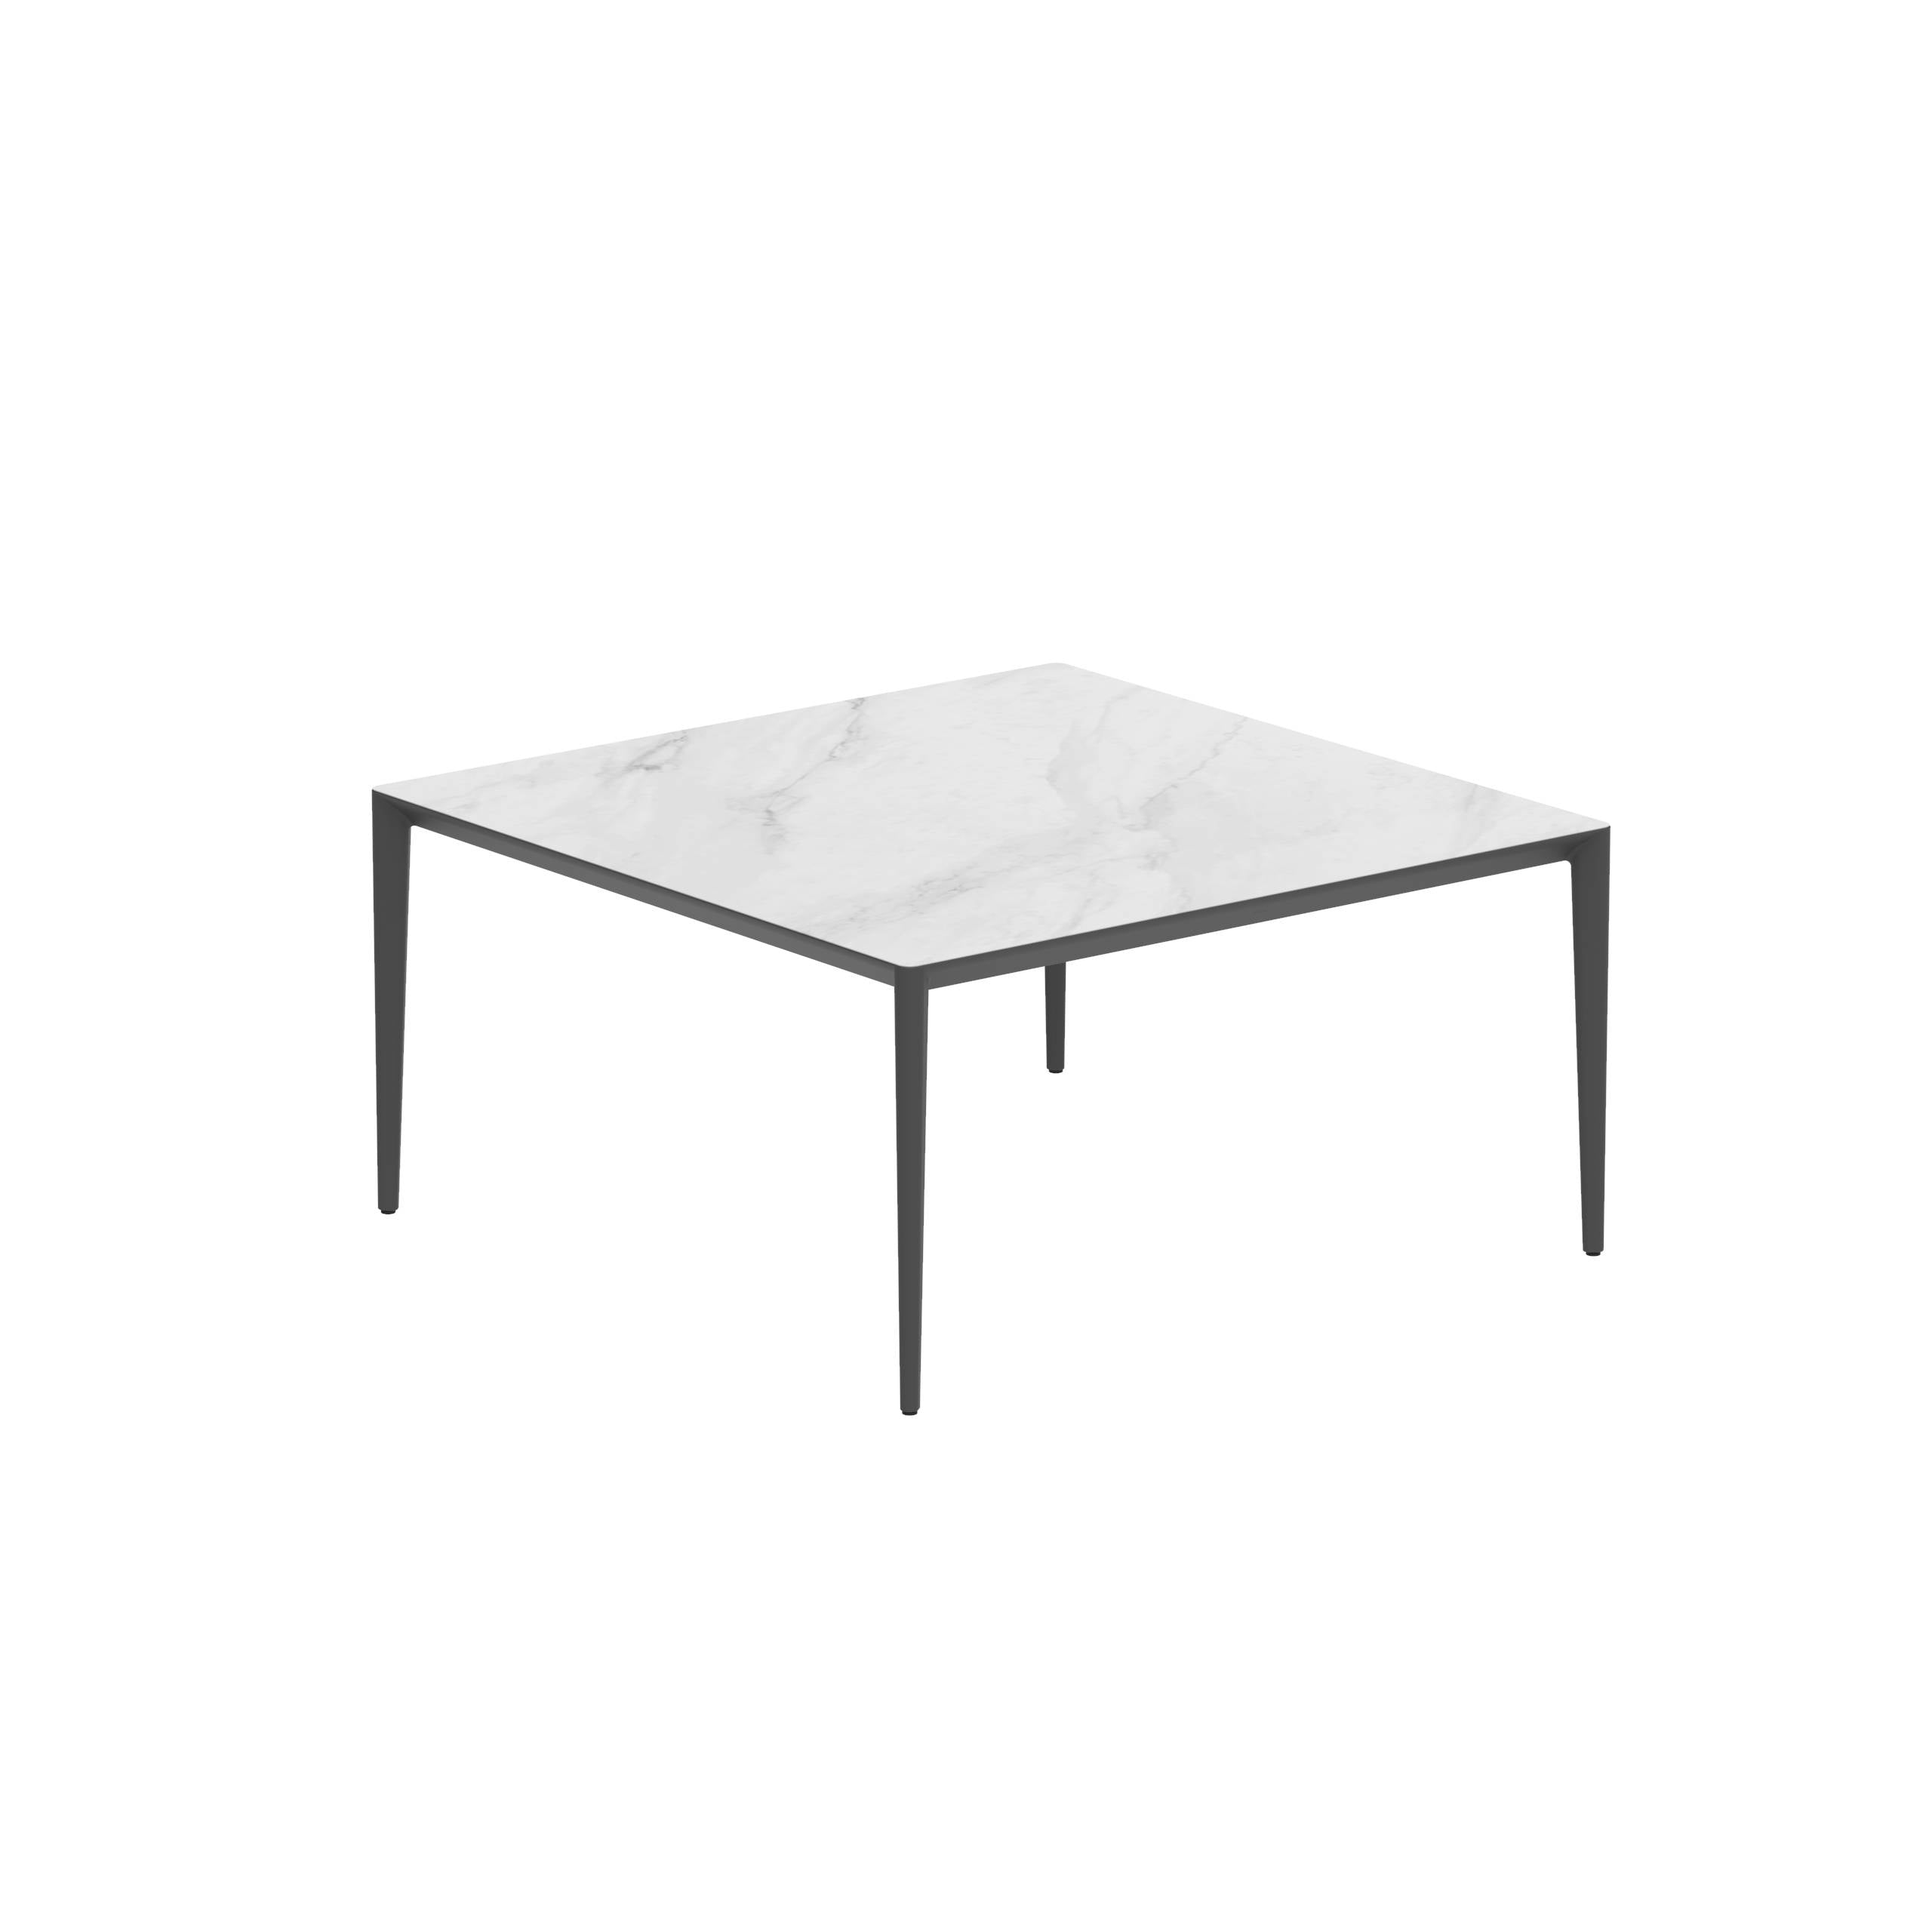 U-Nite Table 150x150cm Anthracite With Ceramic Tabletop In Bianco Statuario